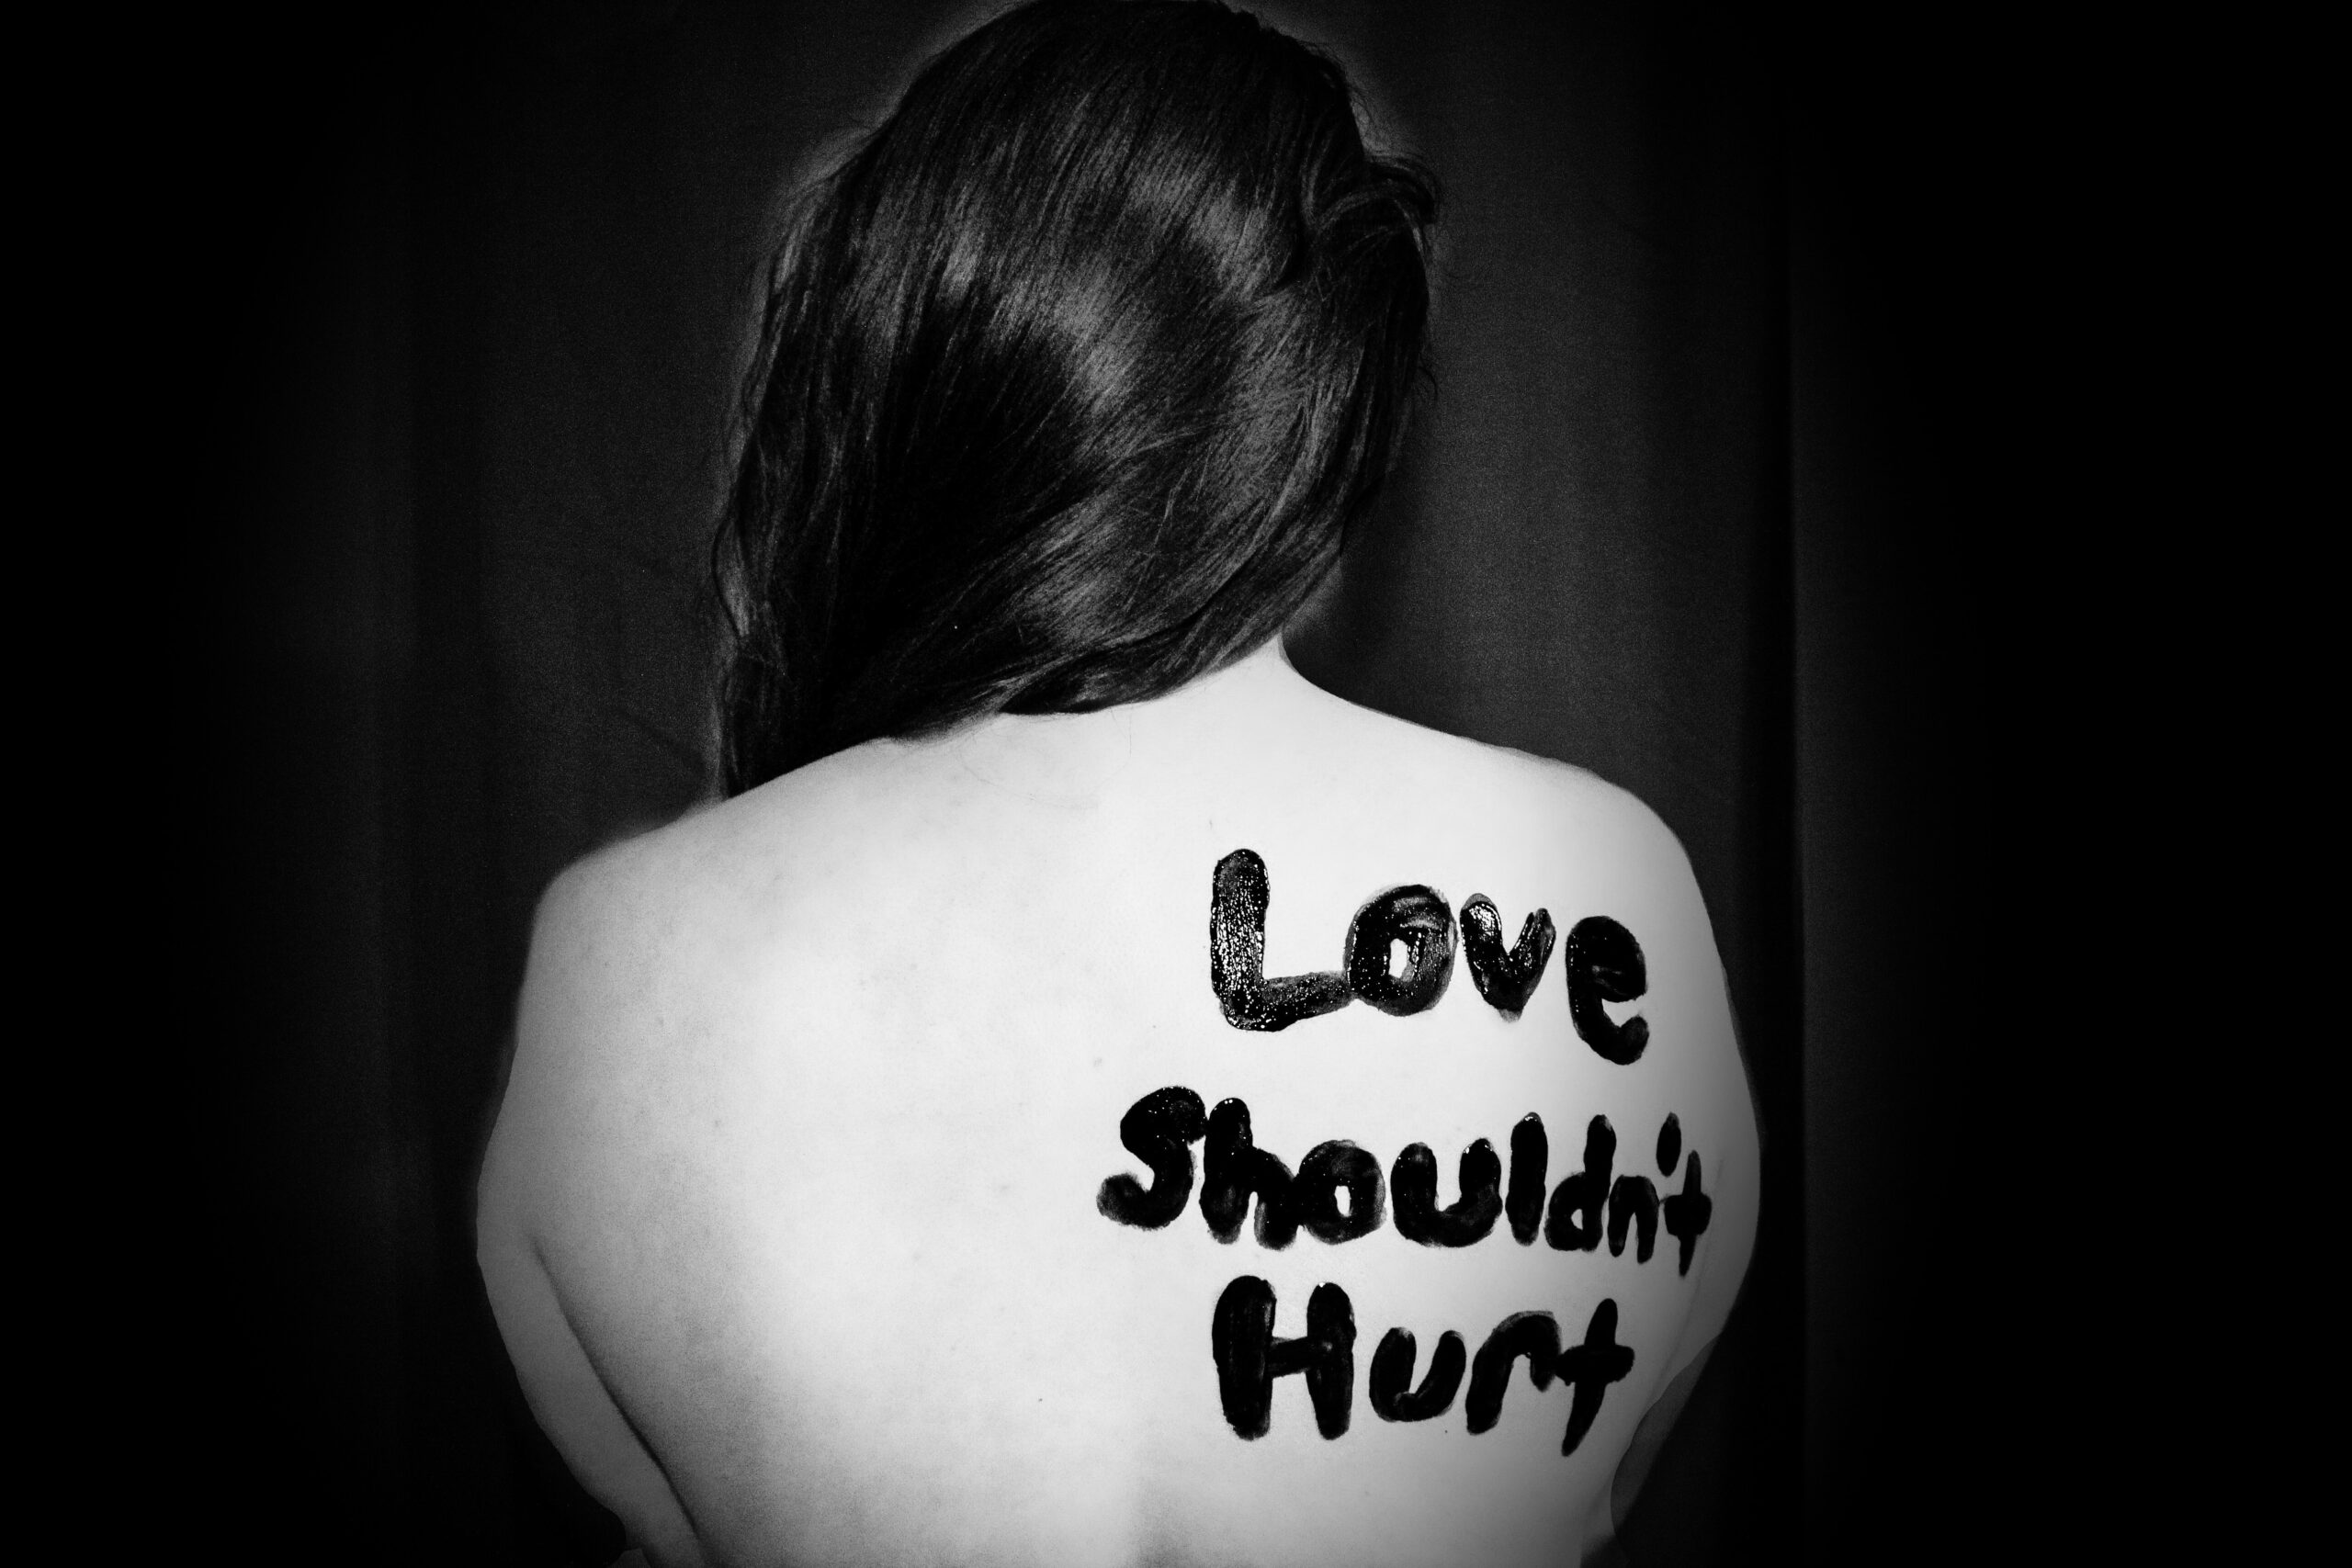 love shouldn't hurt - emotional abuse